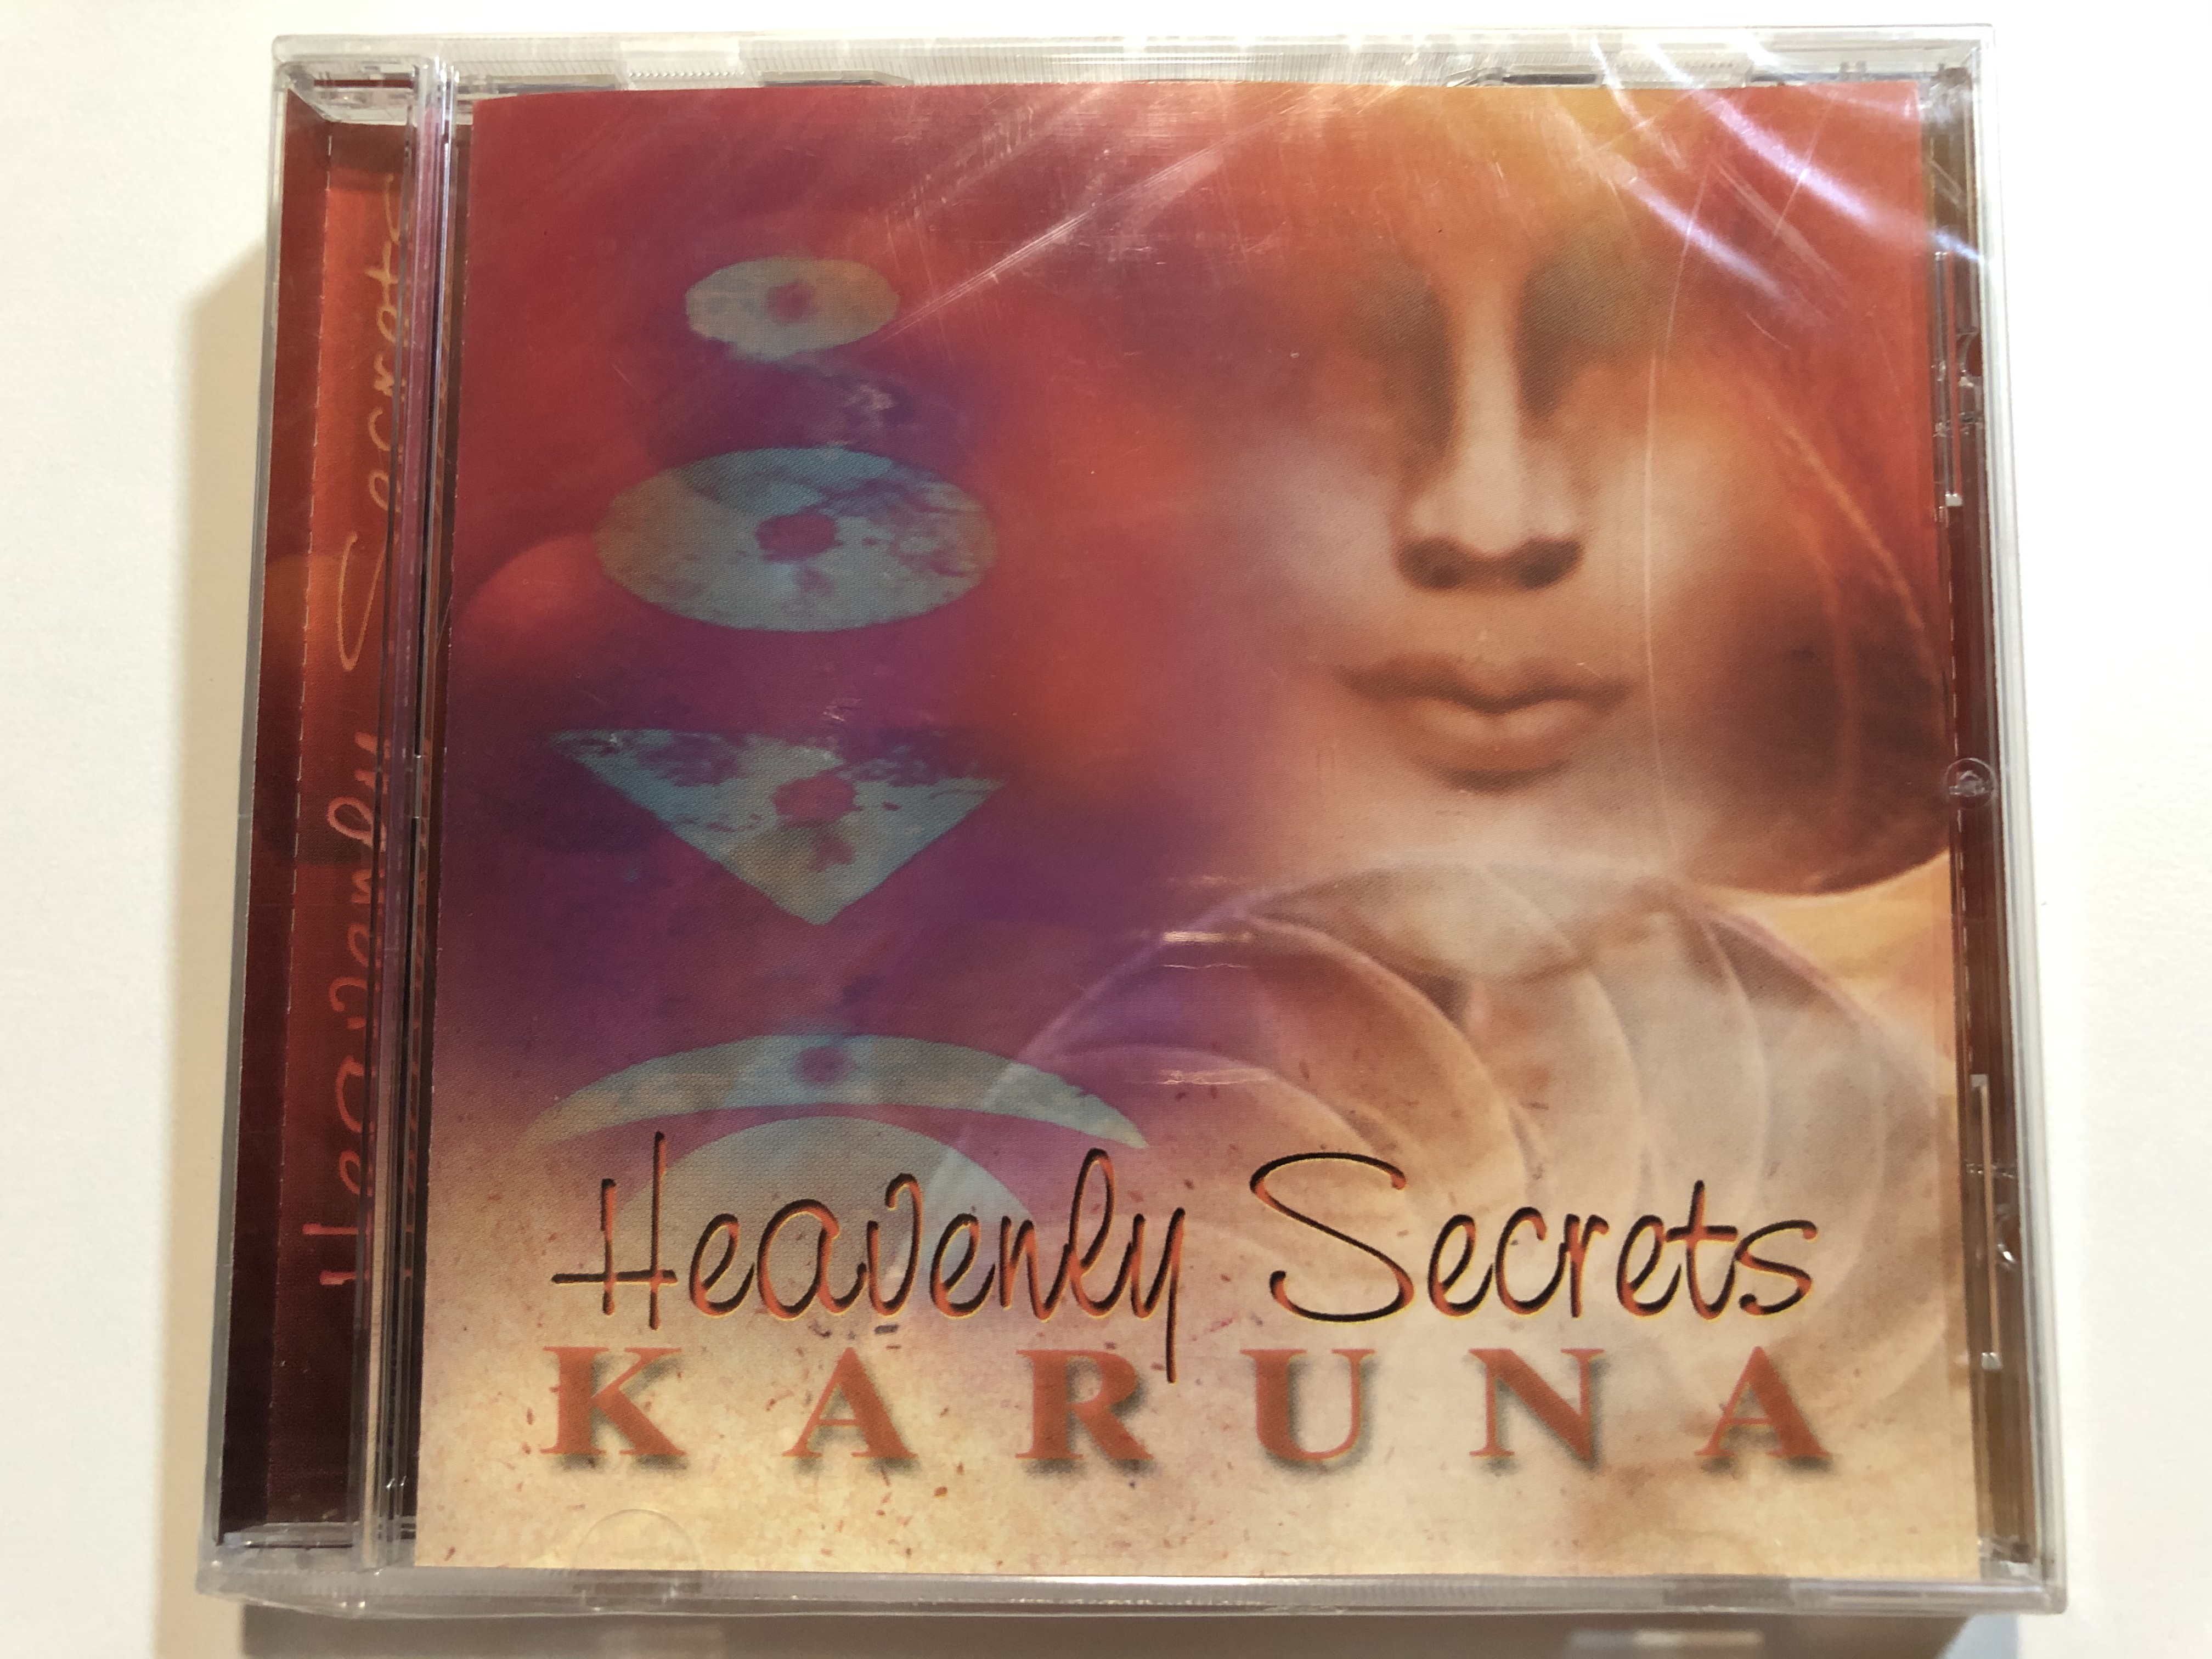 heavenly-secrets-karuna-nightingale-records-audio-cd-1999-ngh-cd-146ed-1-.jpg